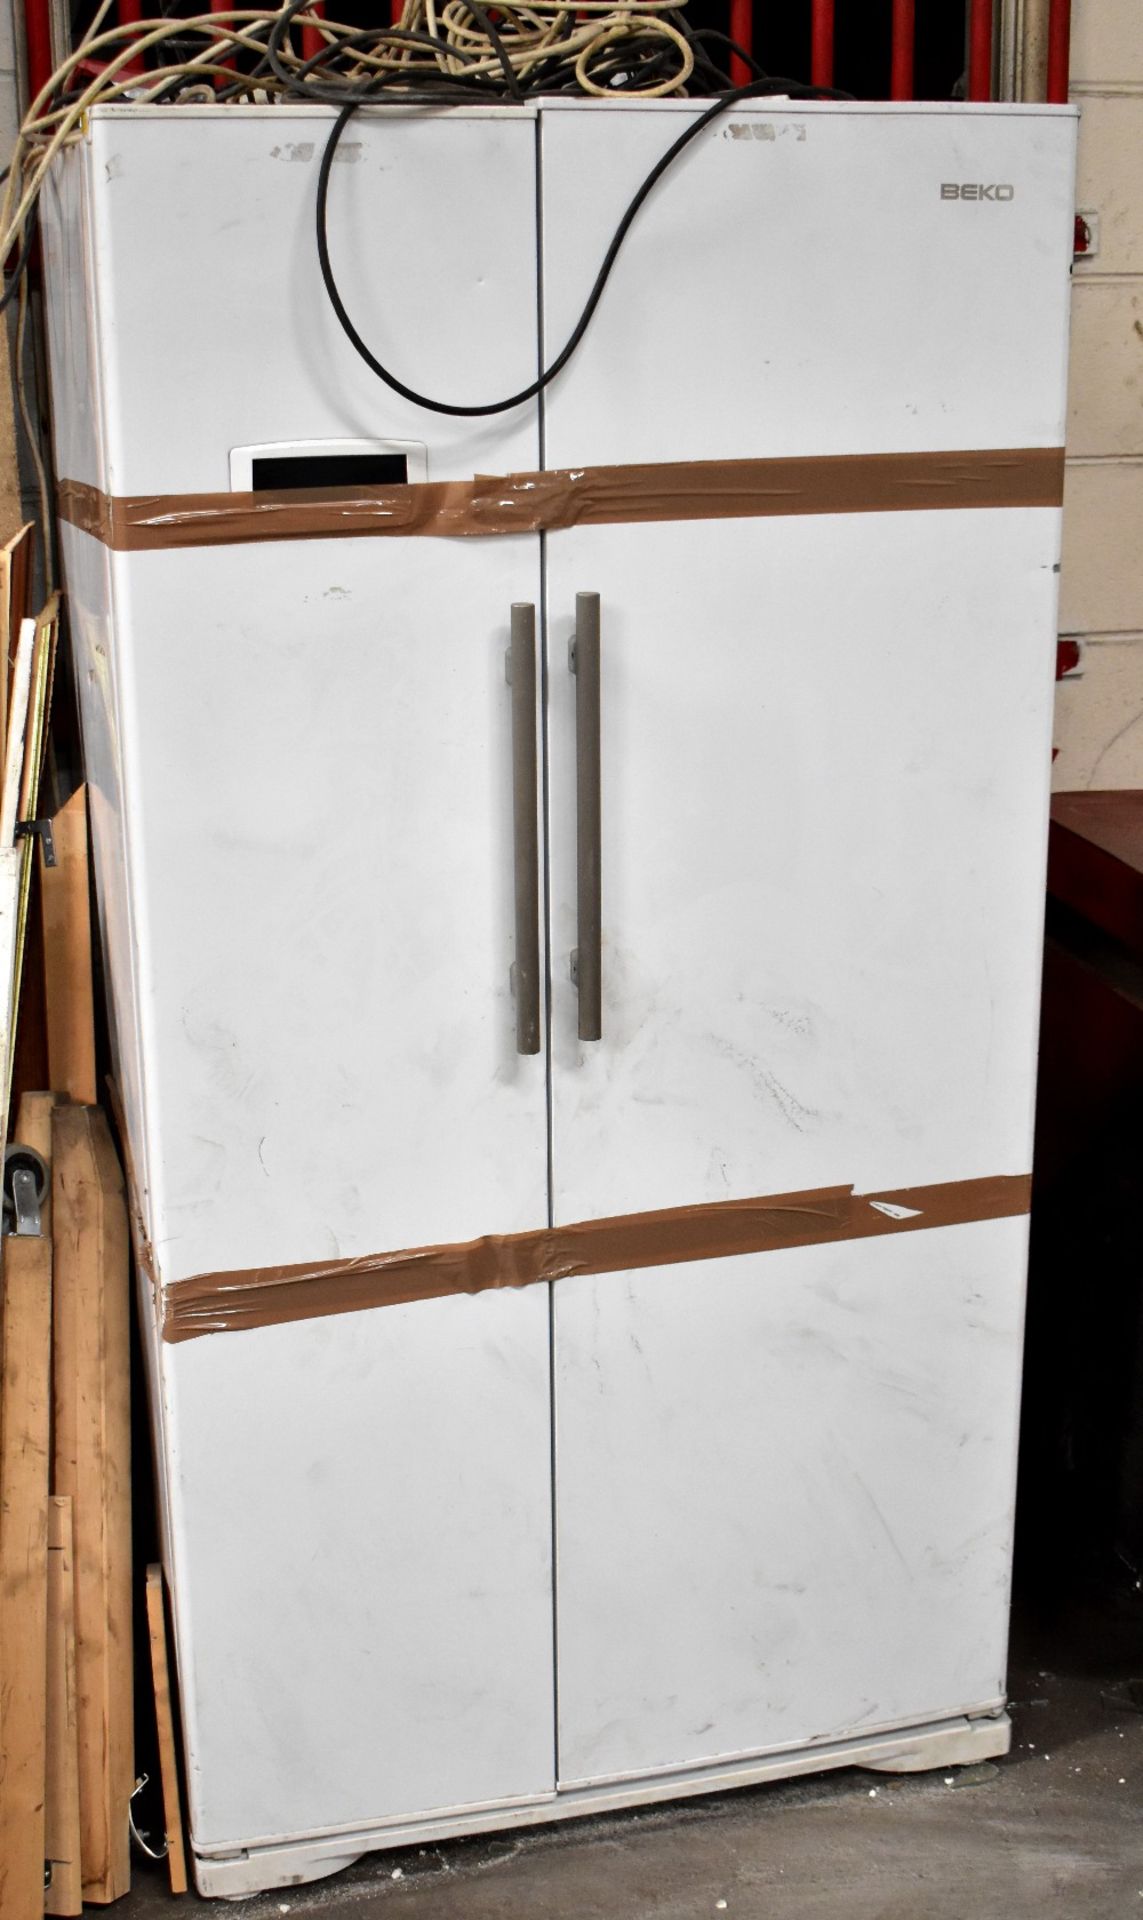 BEKO; an American-style fridge/freezer, height 178cm, width 92cm, depth 67cm (appears complete,